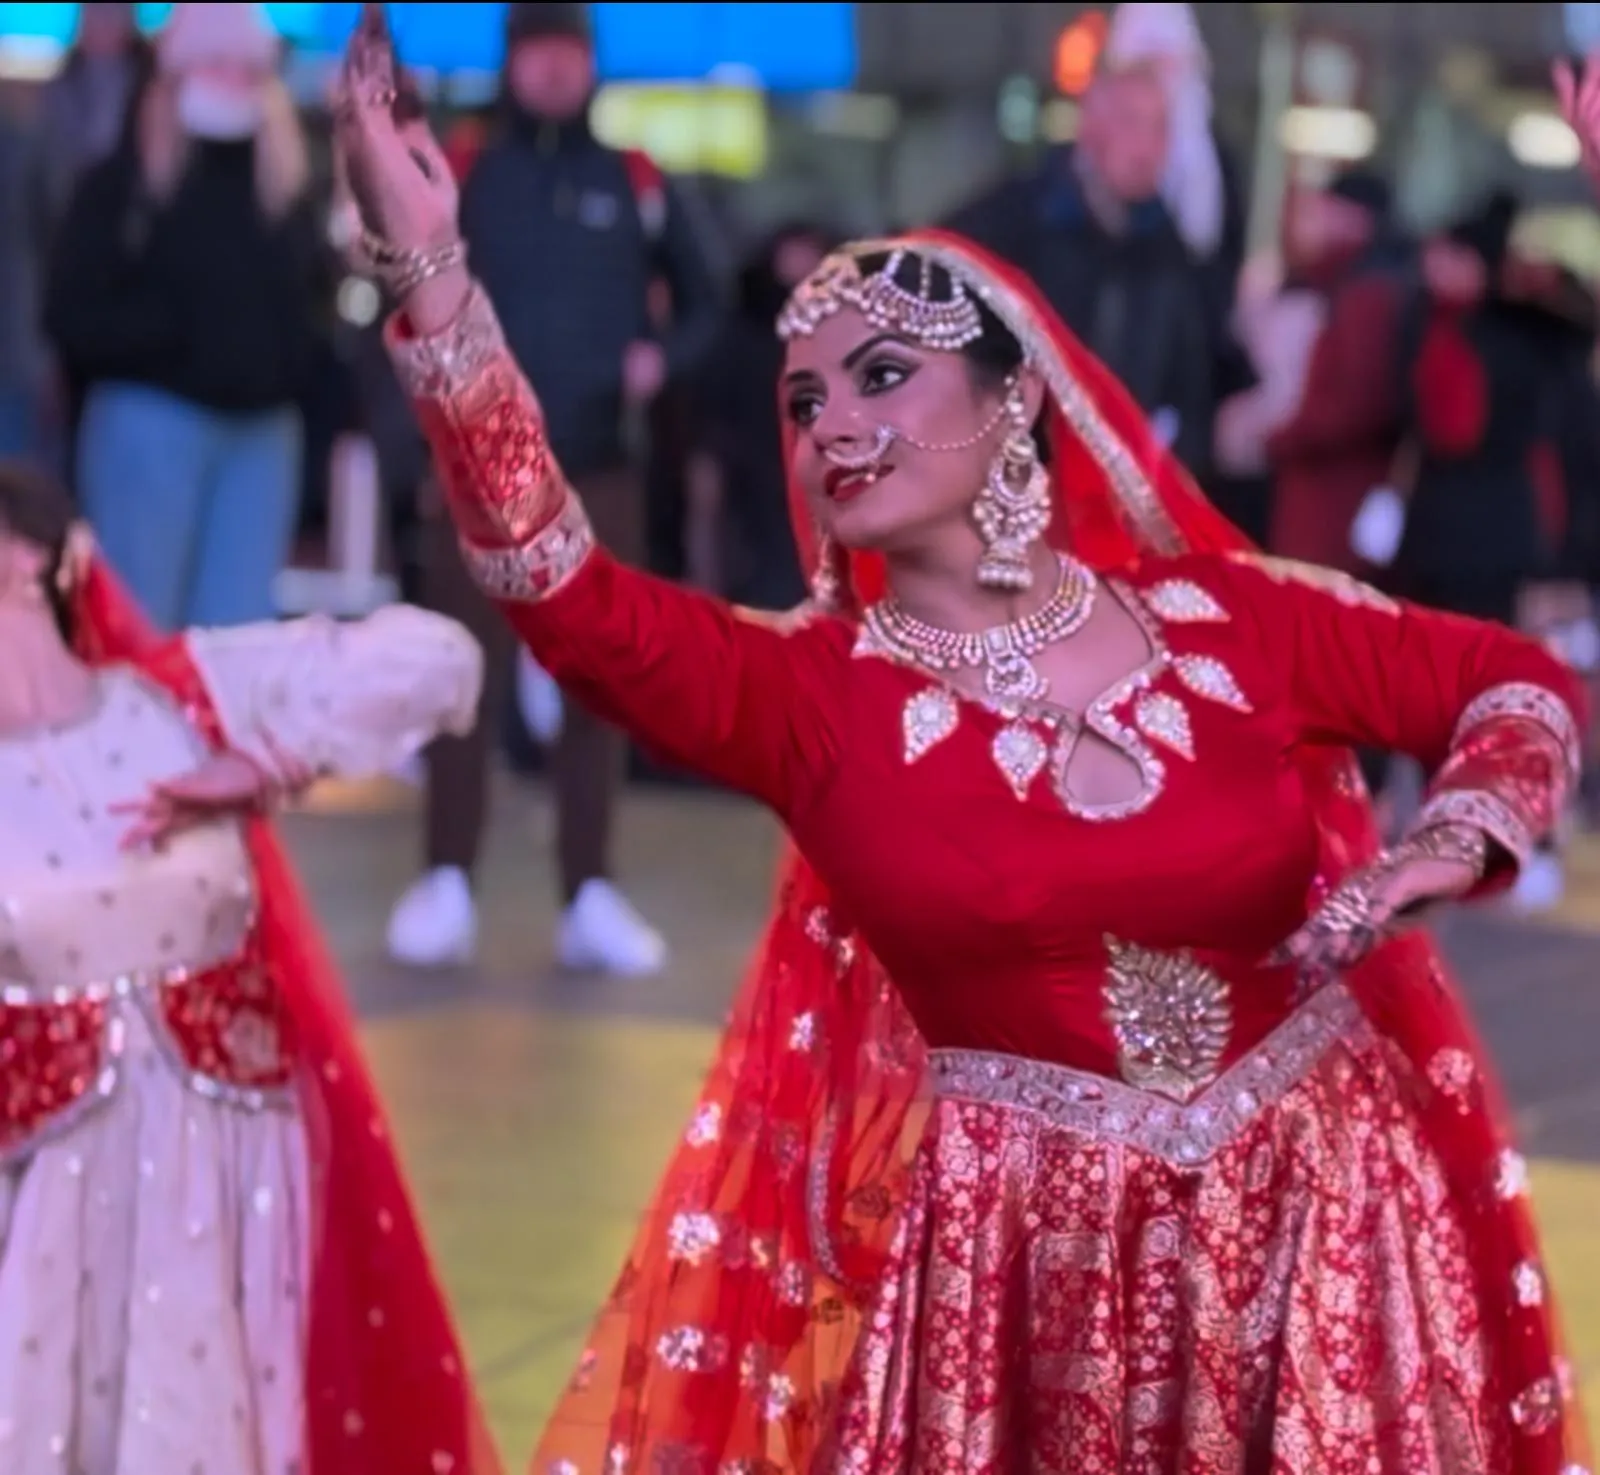 Bihar Neetu Chandra Srivastava shines at Times Square in America